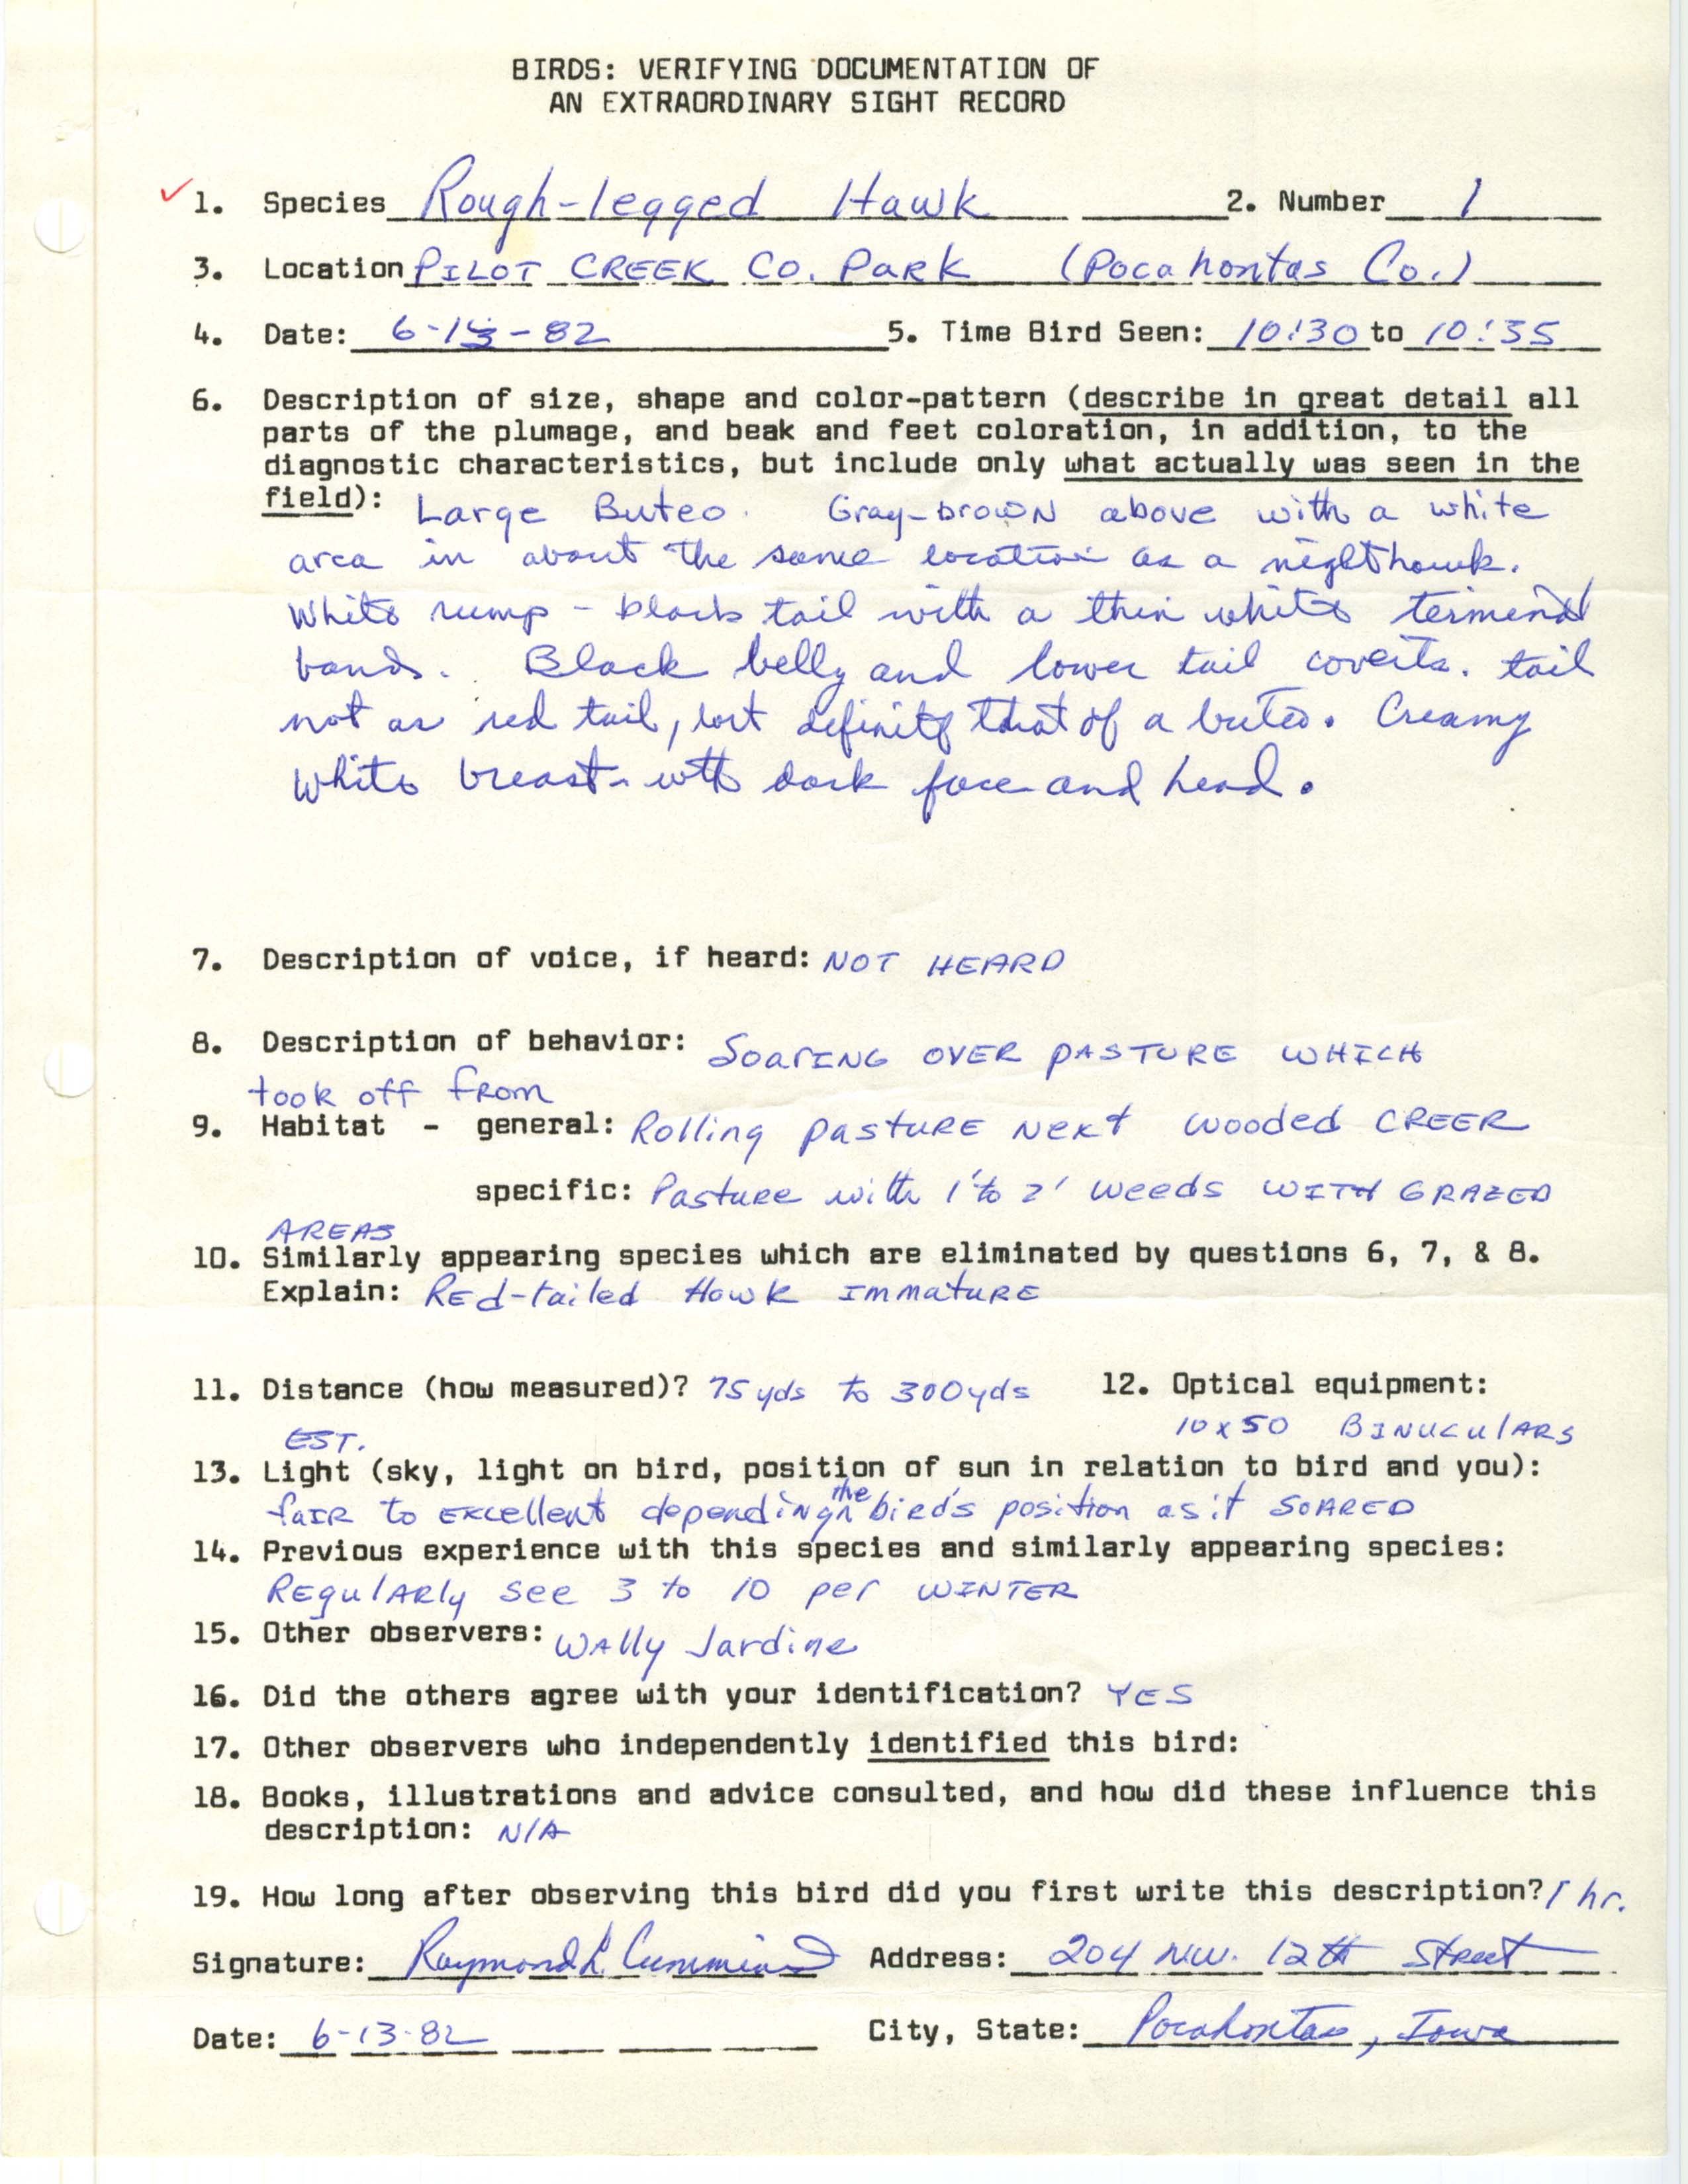 Rare bird documentation form for Rough-legged Hawk at Pilot Creek County Park, 1982